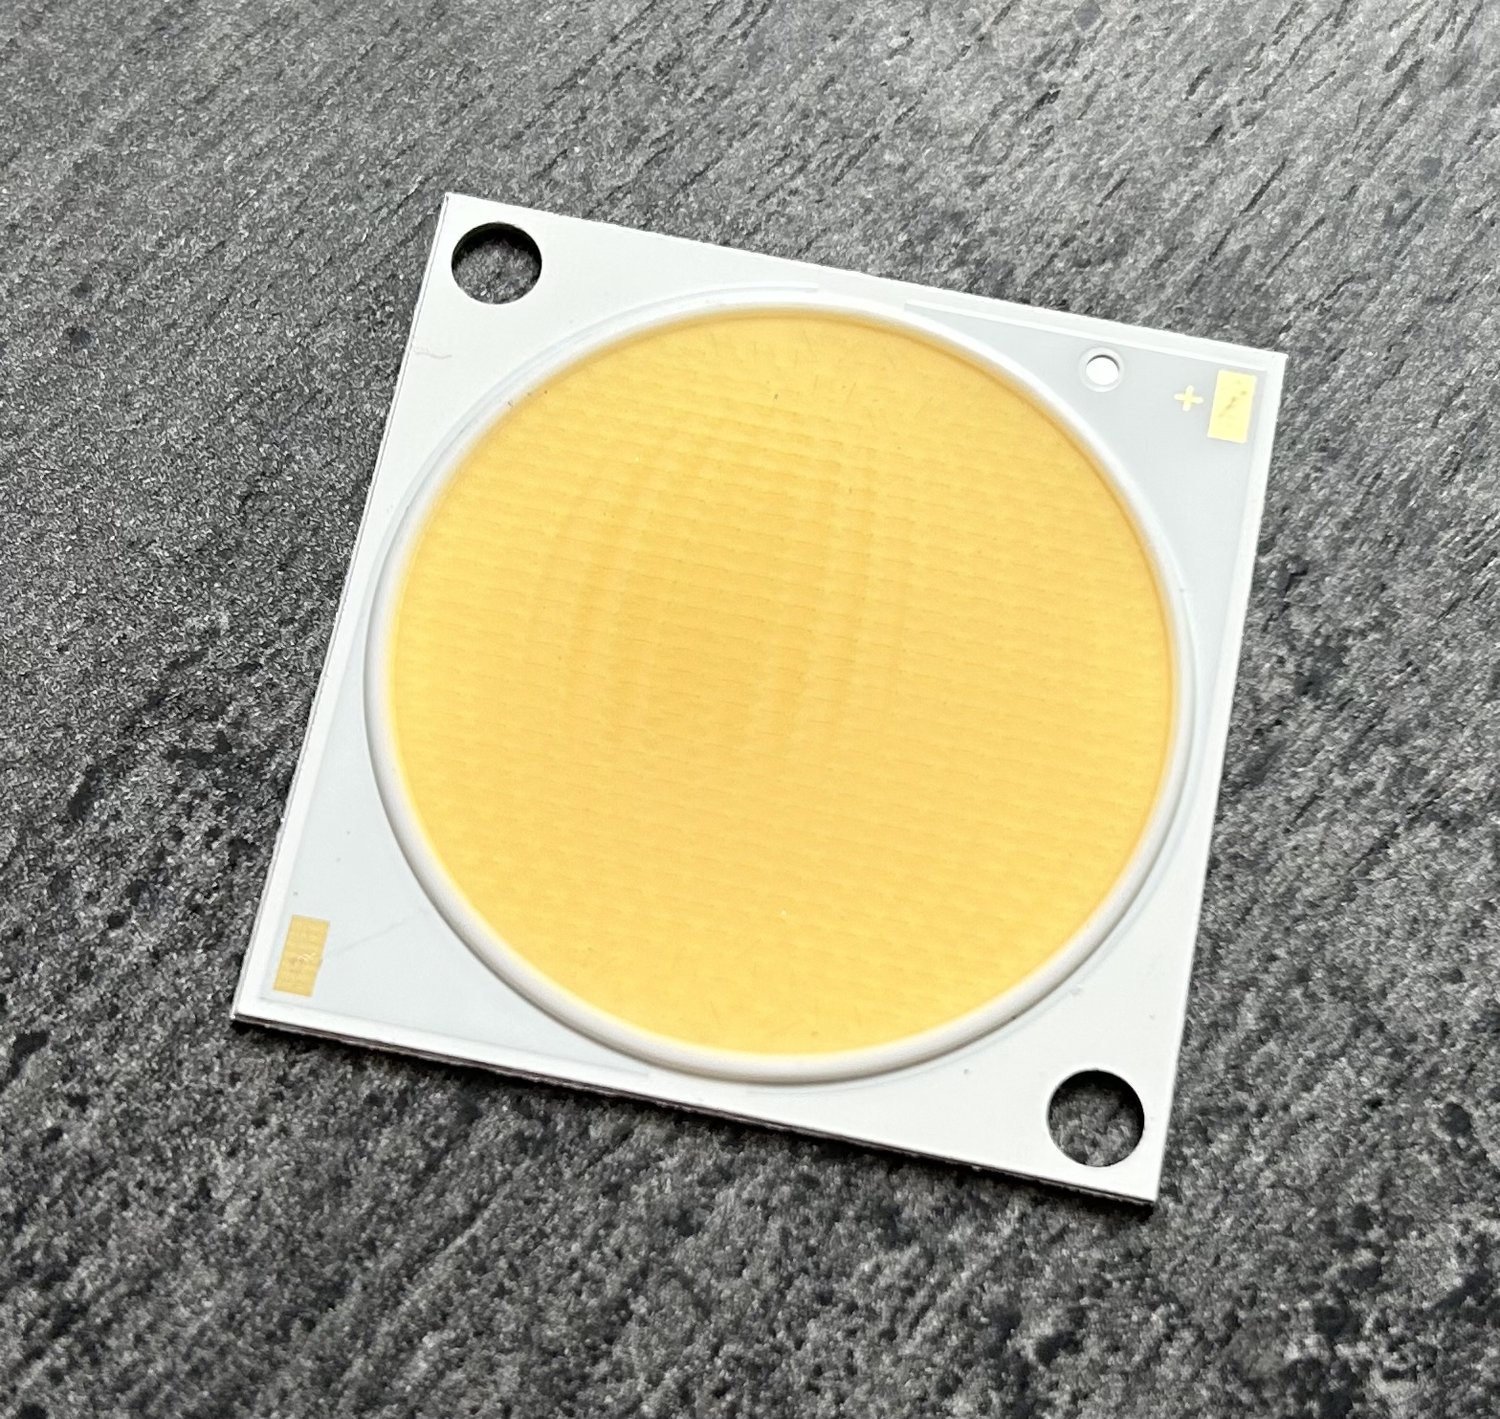 42mm RAID6 LED - White - 578 - 6411 - C10W - Made in Germany